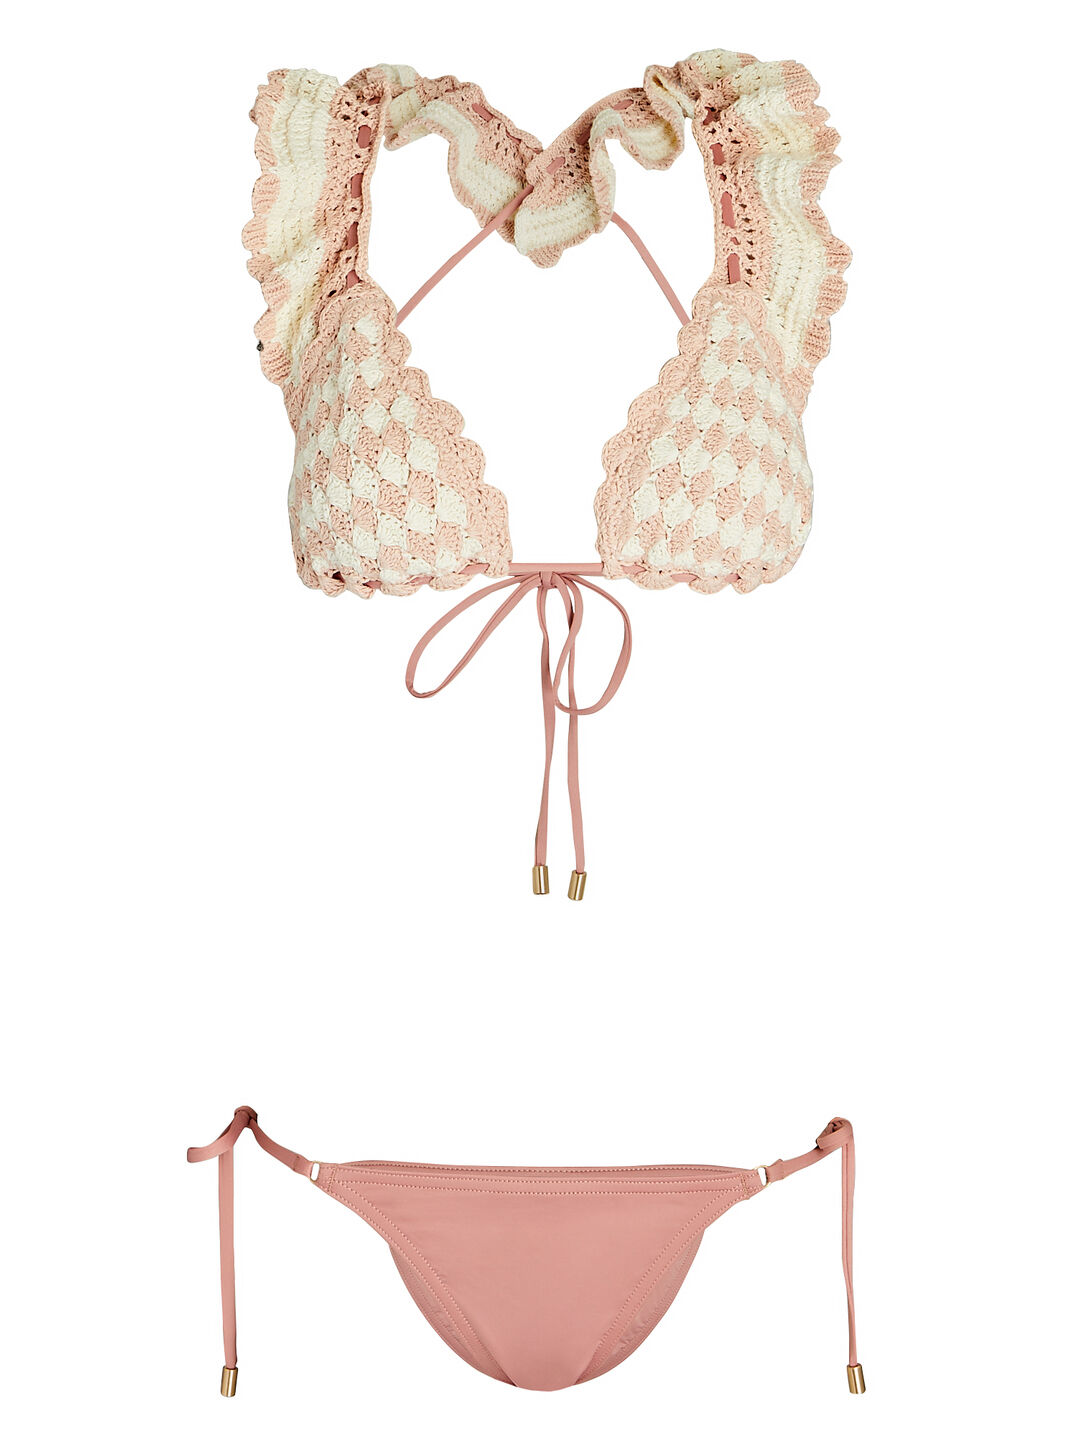 Clover Crocheted Triangle Bikini Set